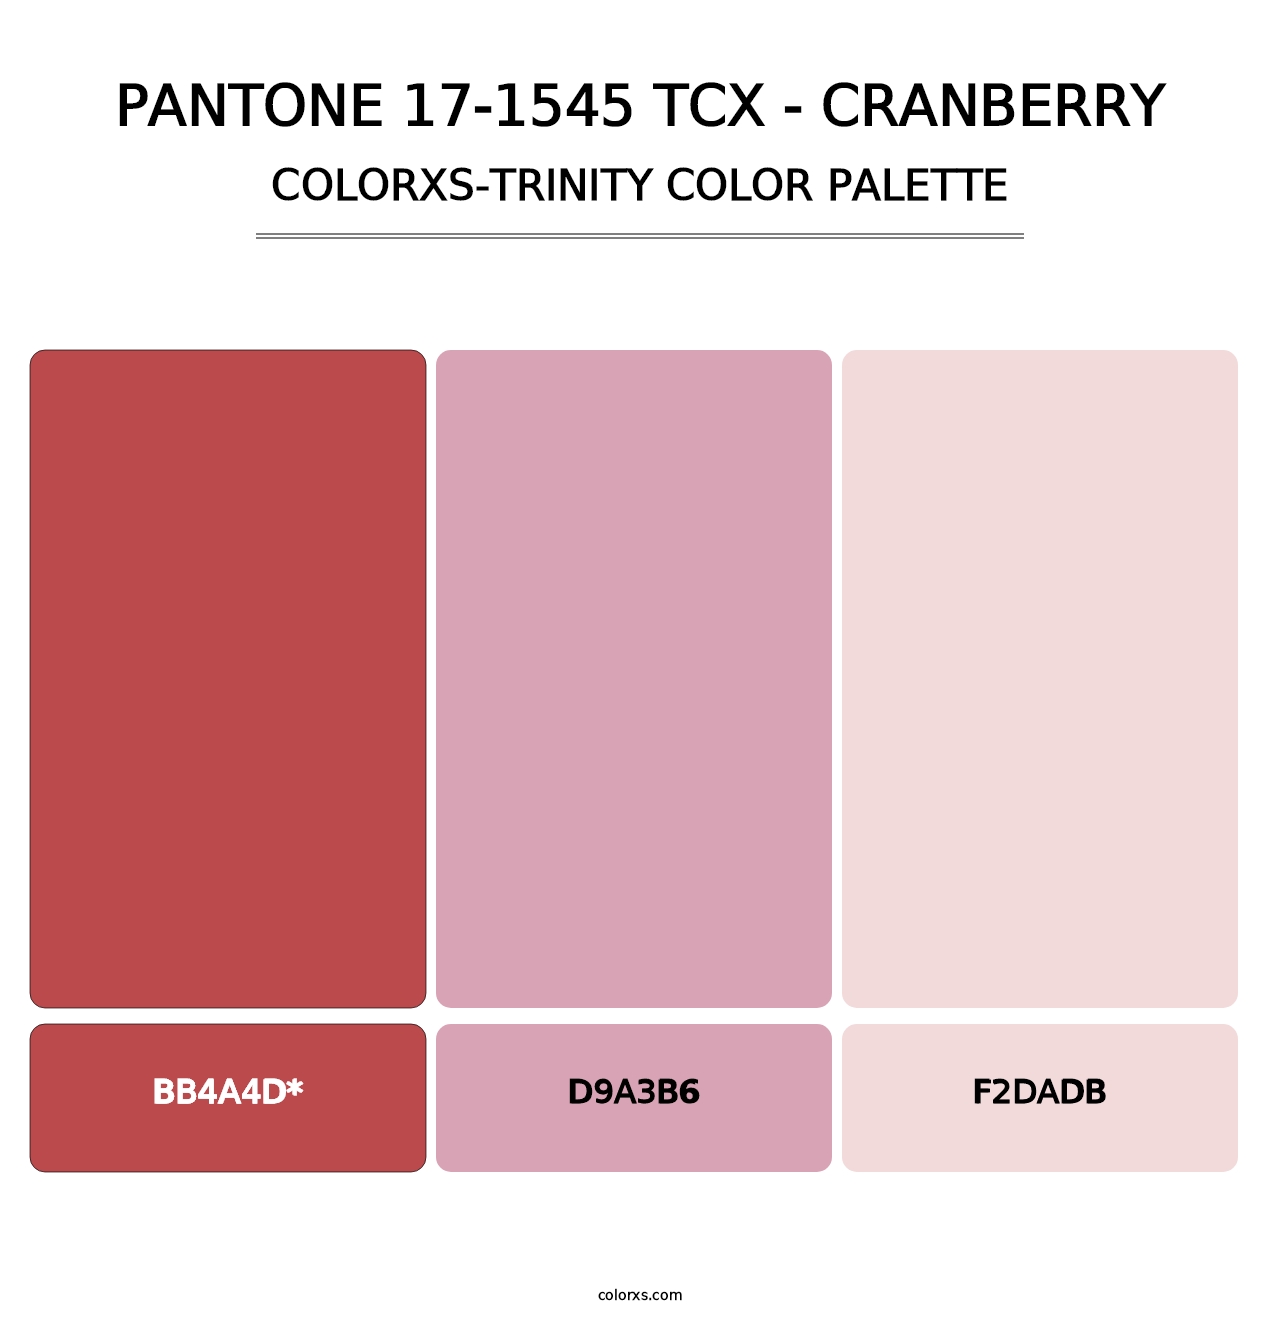 PANTONE 17-1545 TCX - Cranberry - Colorxs Trinity Palette